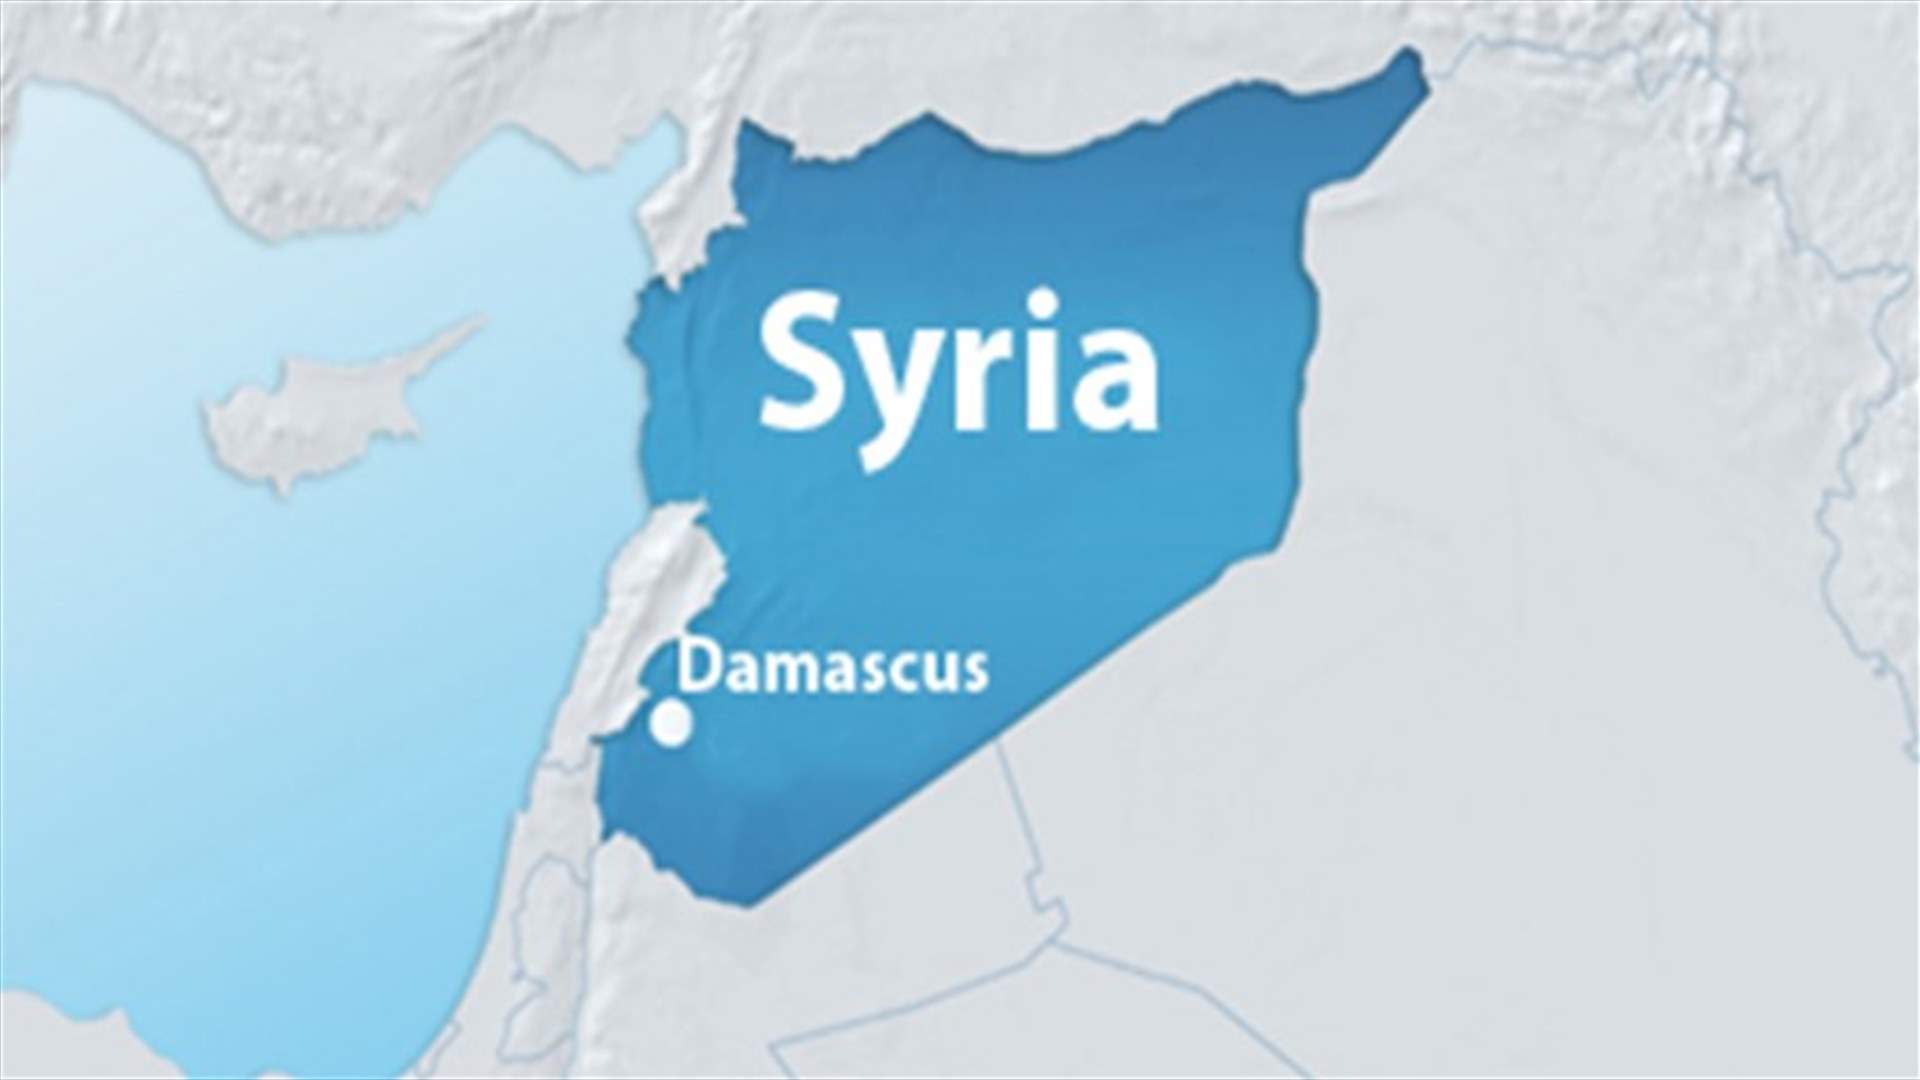 Syria denies targeting camps, UN condemns &quot;murderous attacks&quot;